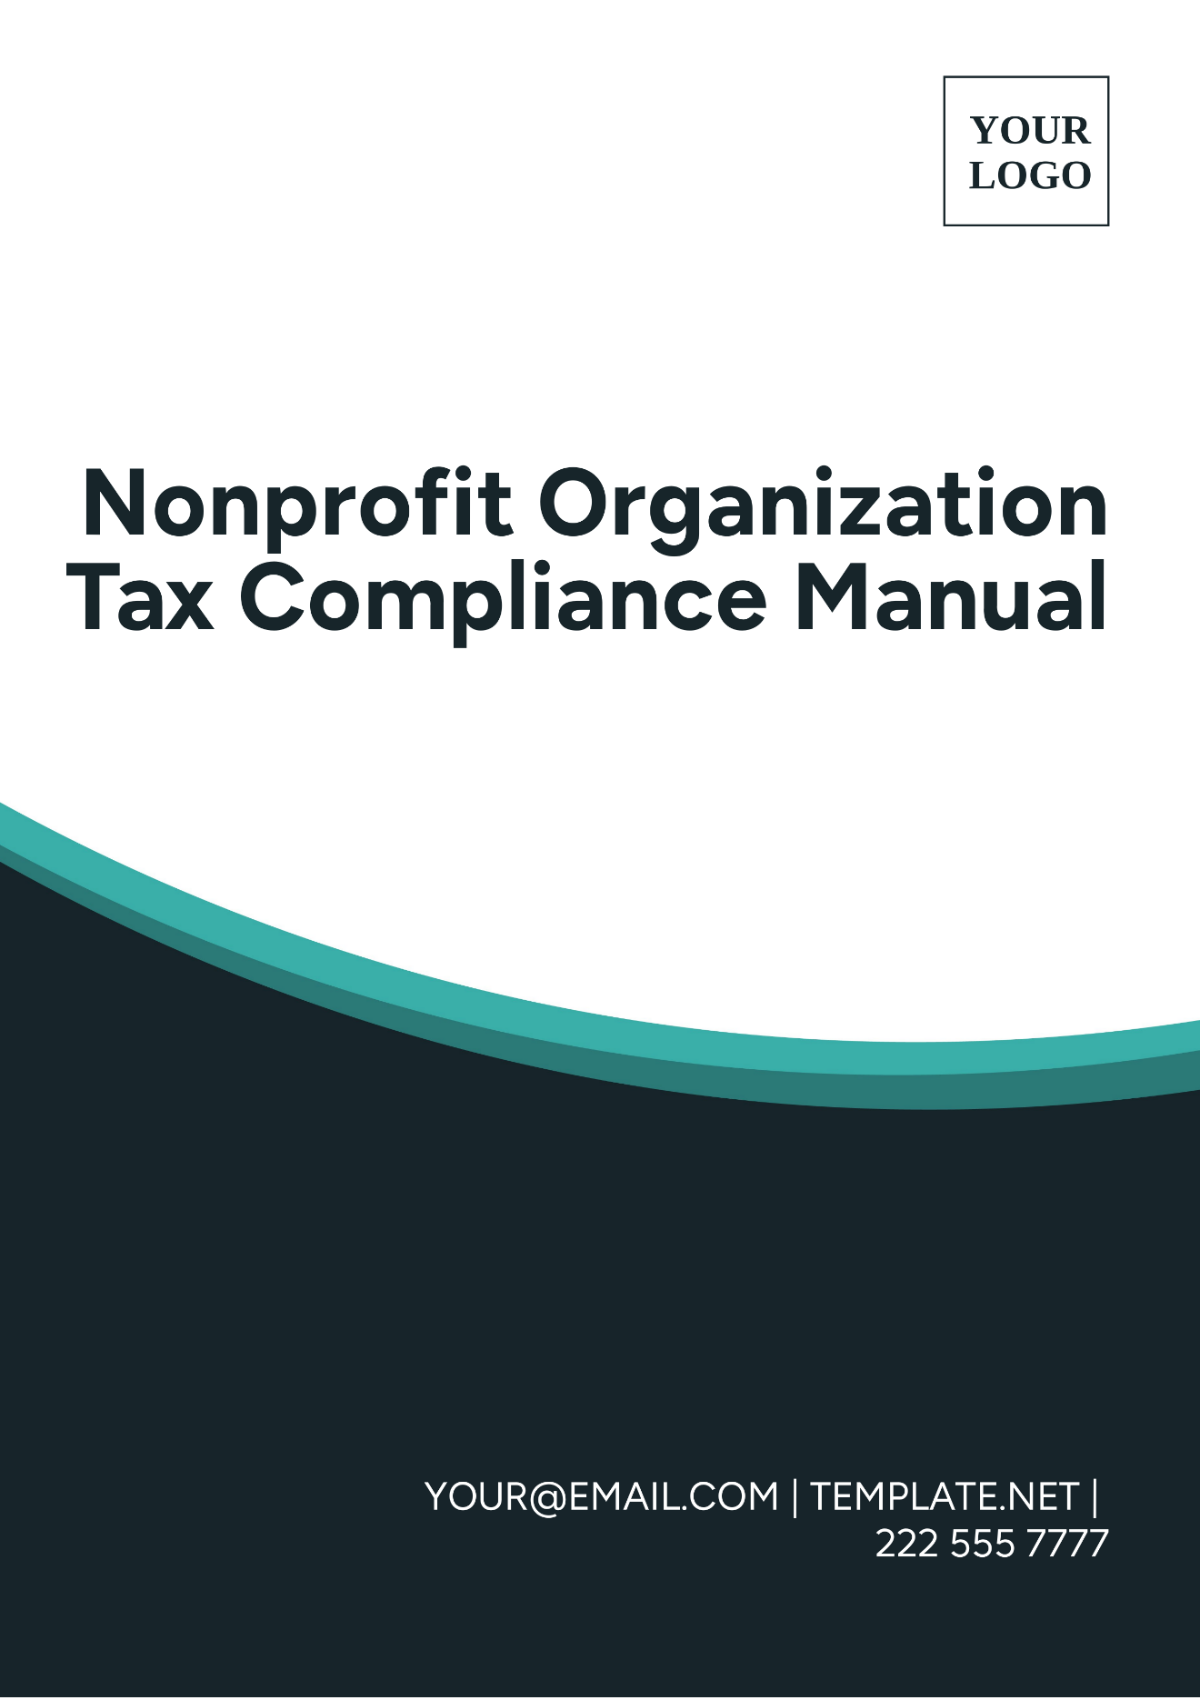 Nonprofit Organization Tax Compliance Manual Template